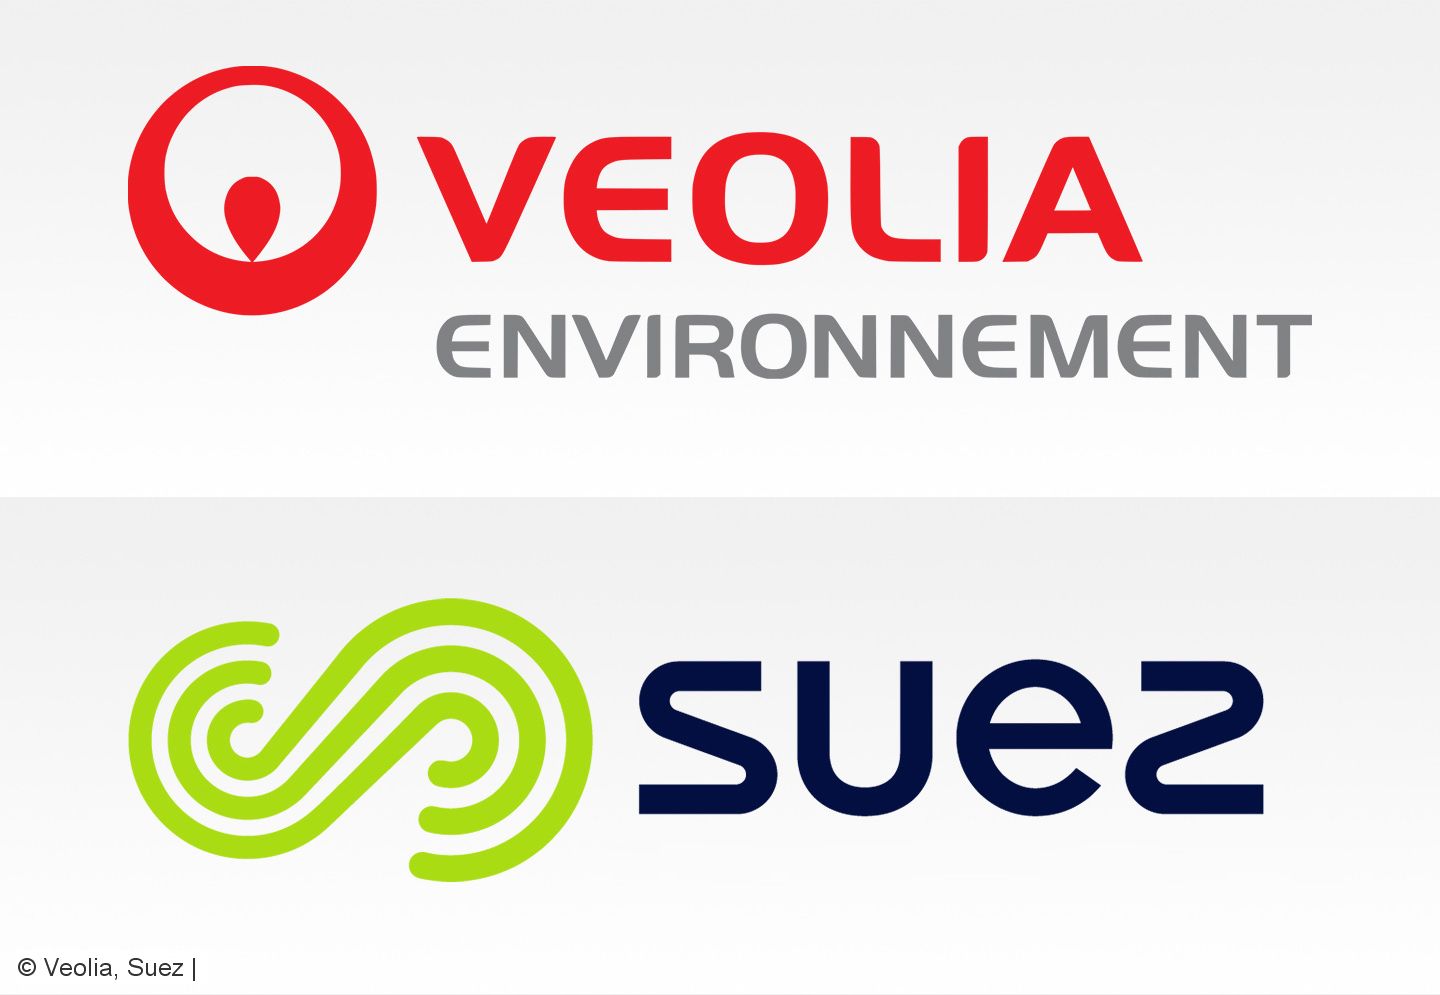  Veolia logo positioned above the Suez logo